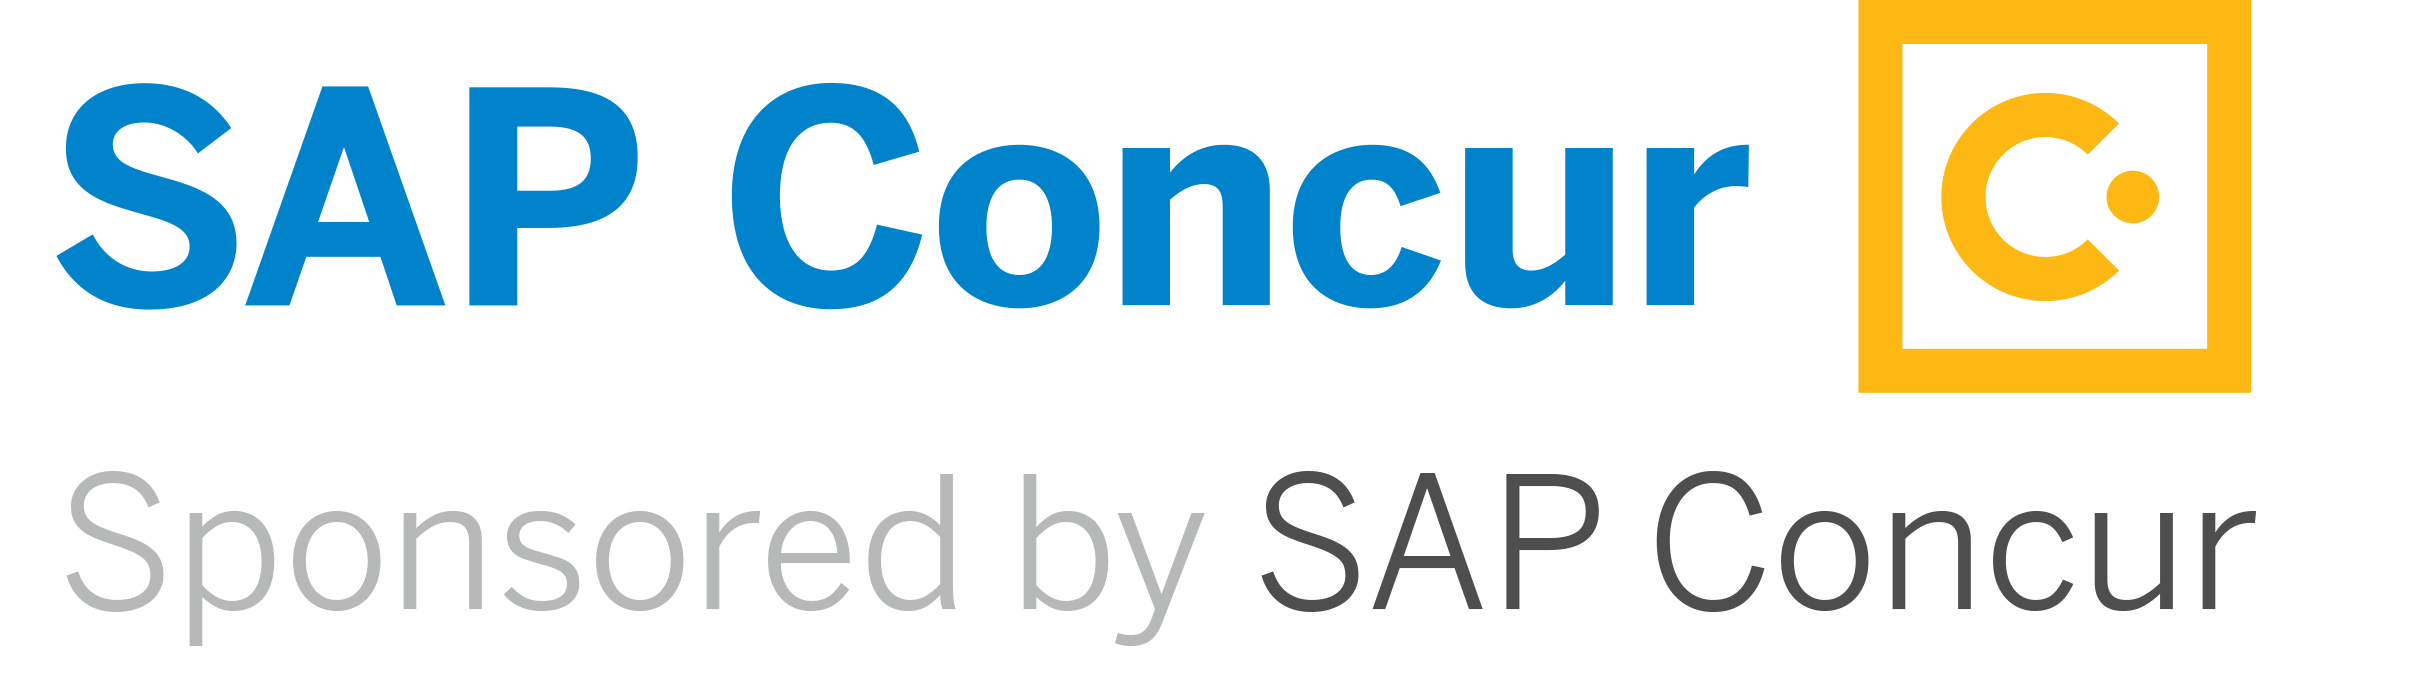 Sponsored-by-SAP-logo